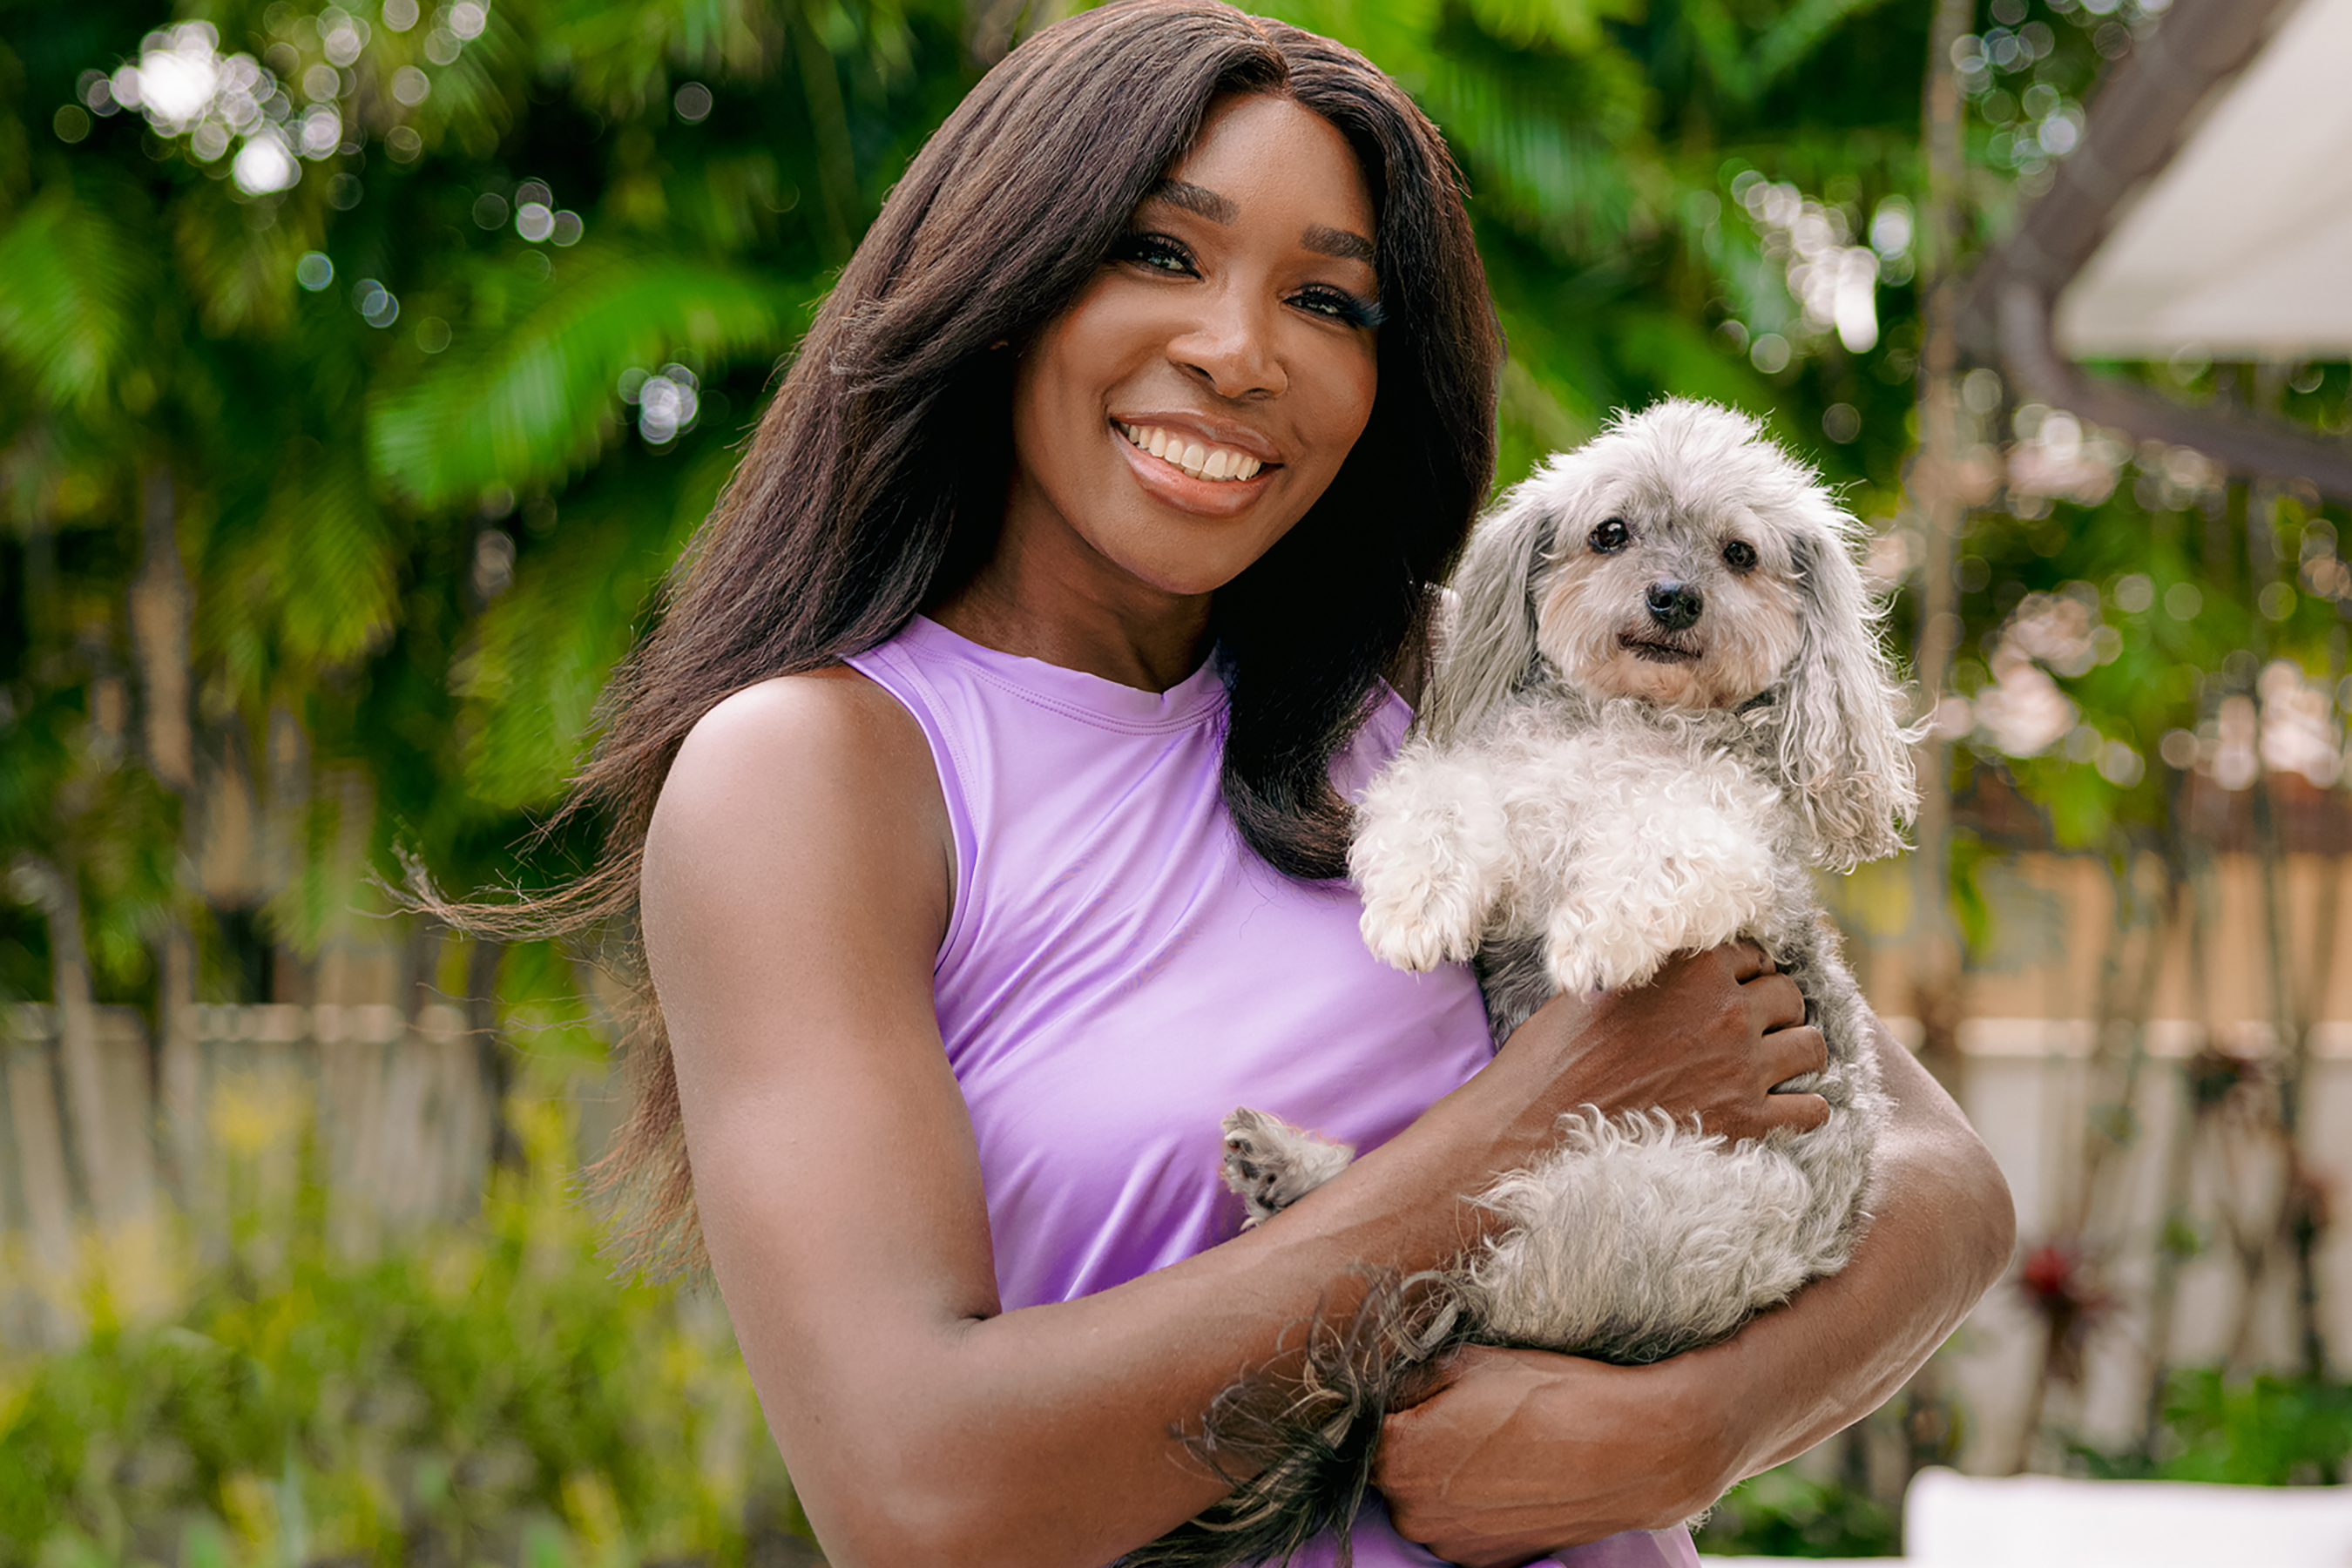 Venus Williams and her dog.